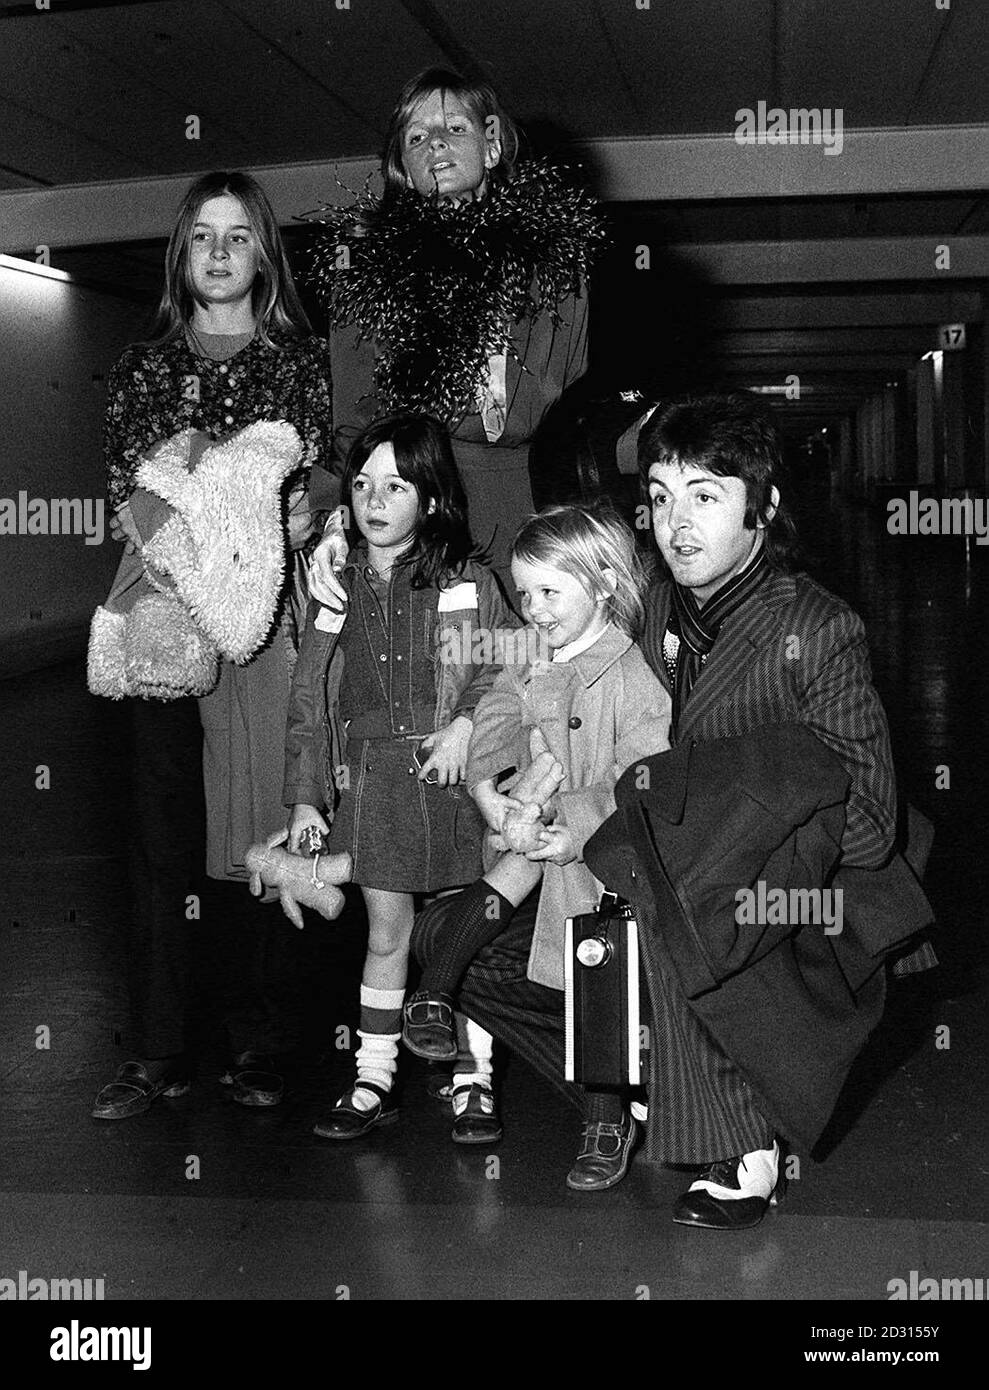 Paul McCartney daughter: Is Stella McCartney Paul's daughter